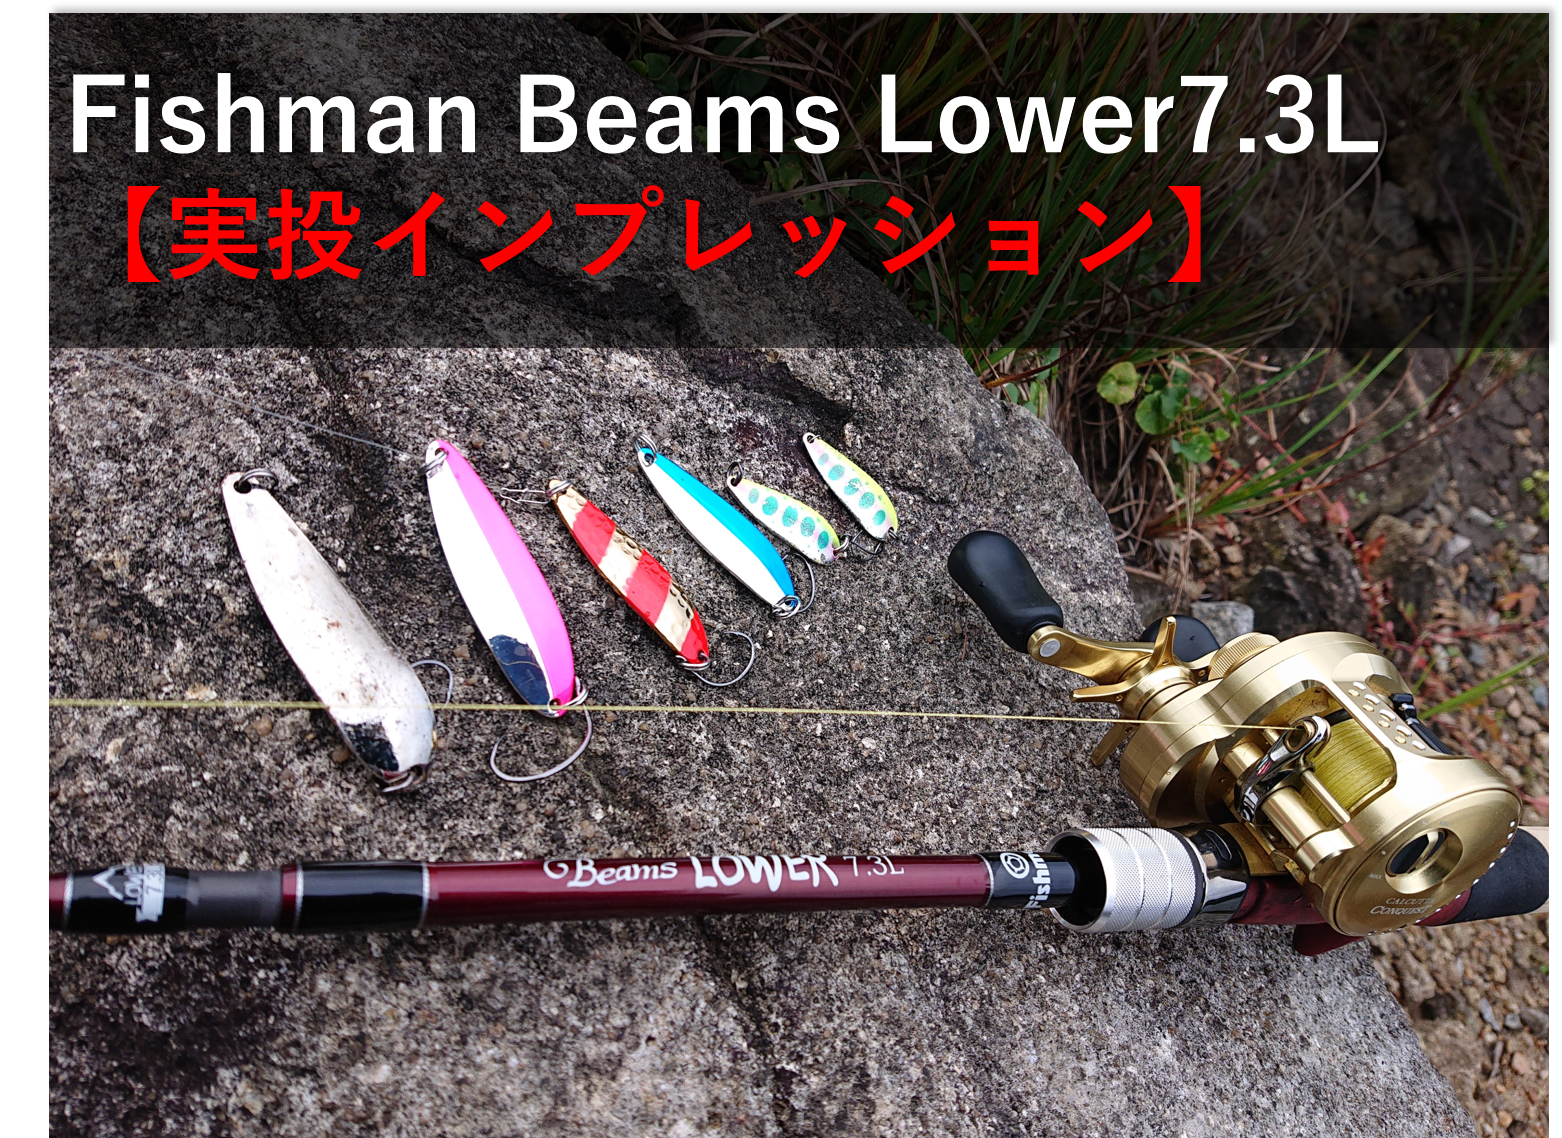 Fishman ビームスローワー73L【実投インプレ】〇〇感に浸れるベイト 